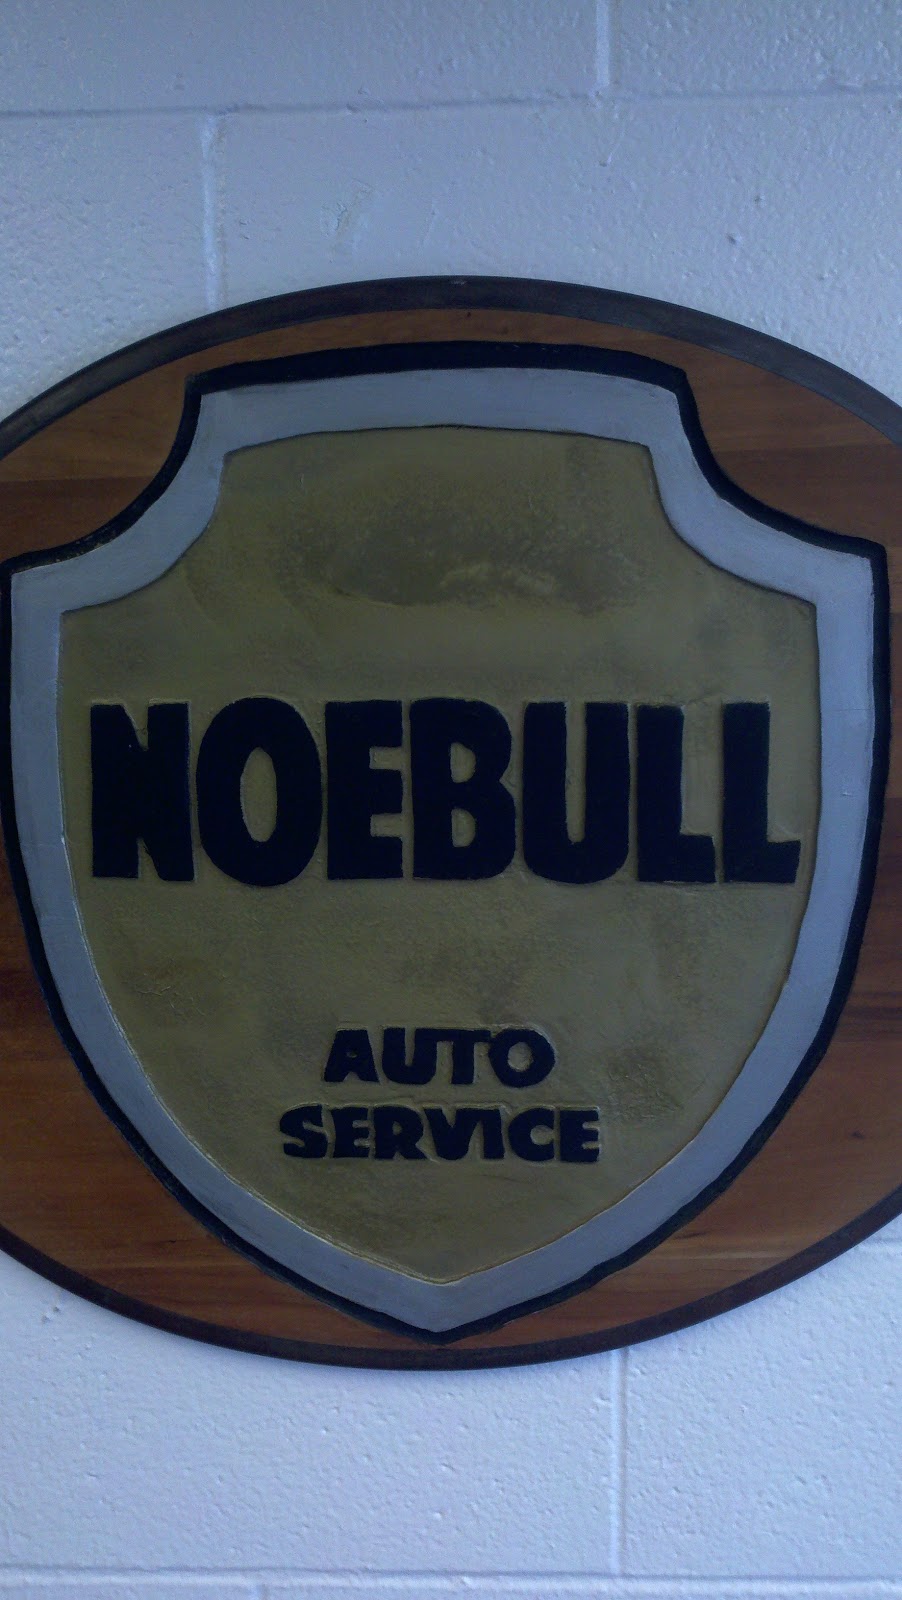 Noebull Automotive | 4524 Kenny Rd B, Columbus, OH 43220, USA | Phone: (614) 725-5708